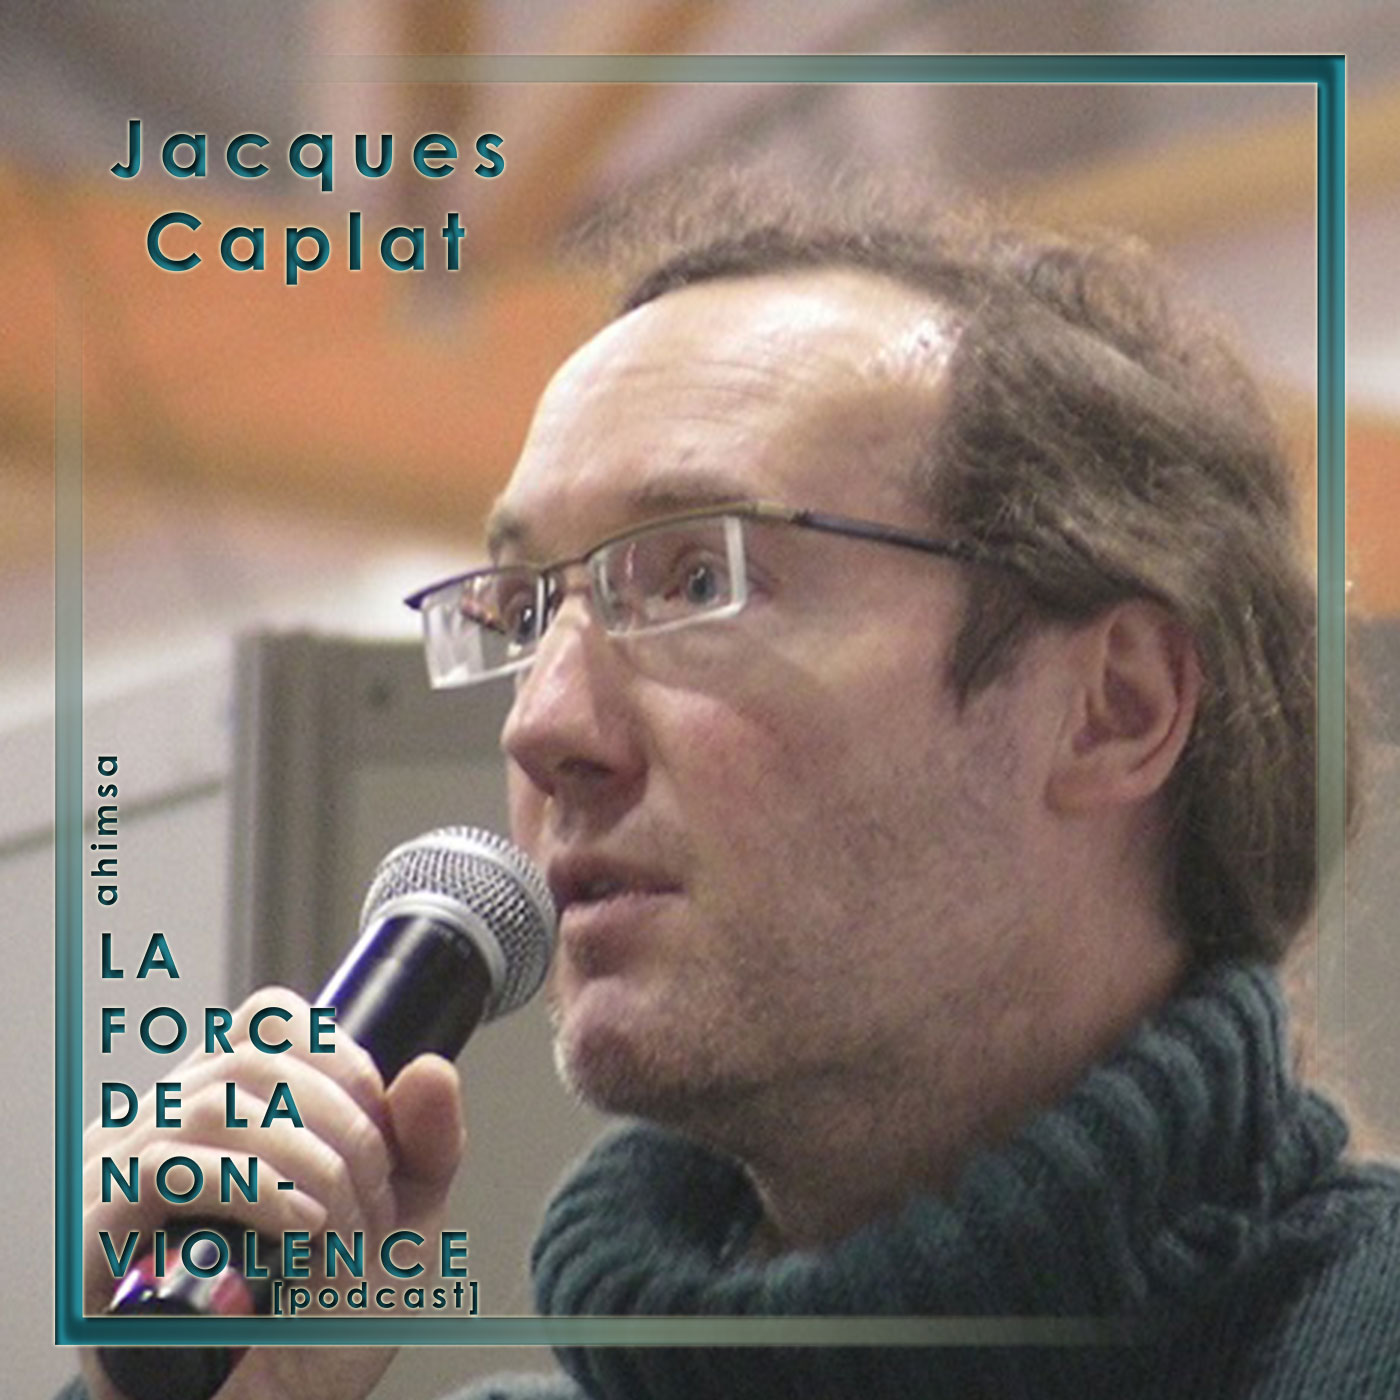 Jacques-Caplat-podcast-La-Force-de-la-Non-violence